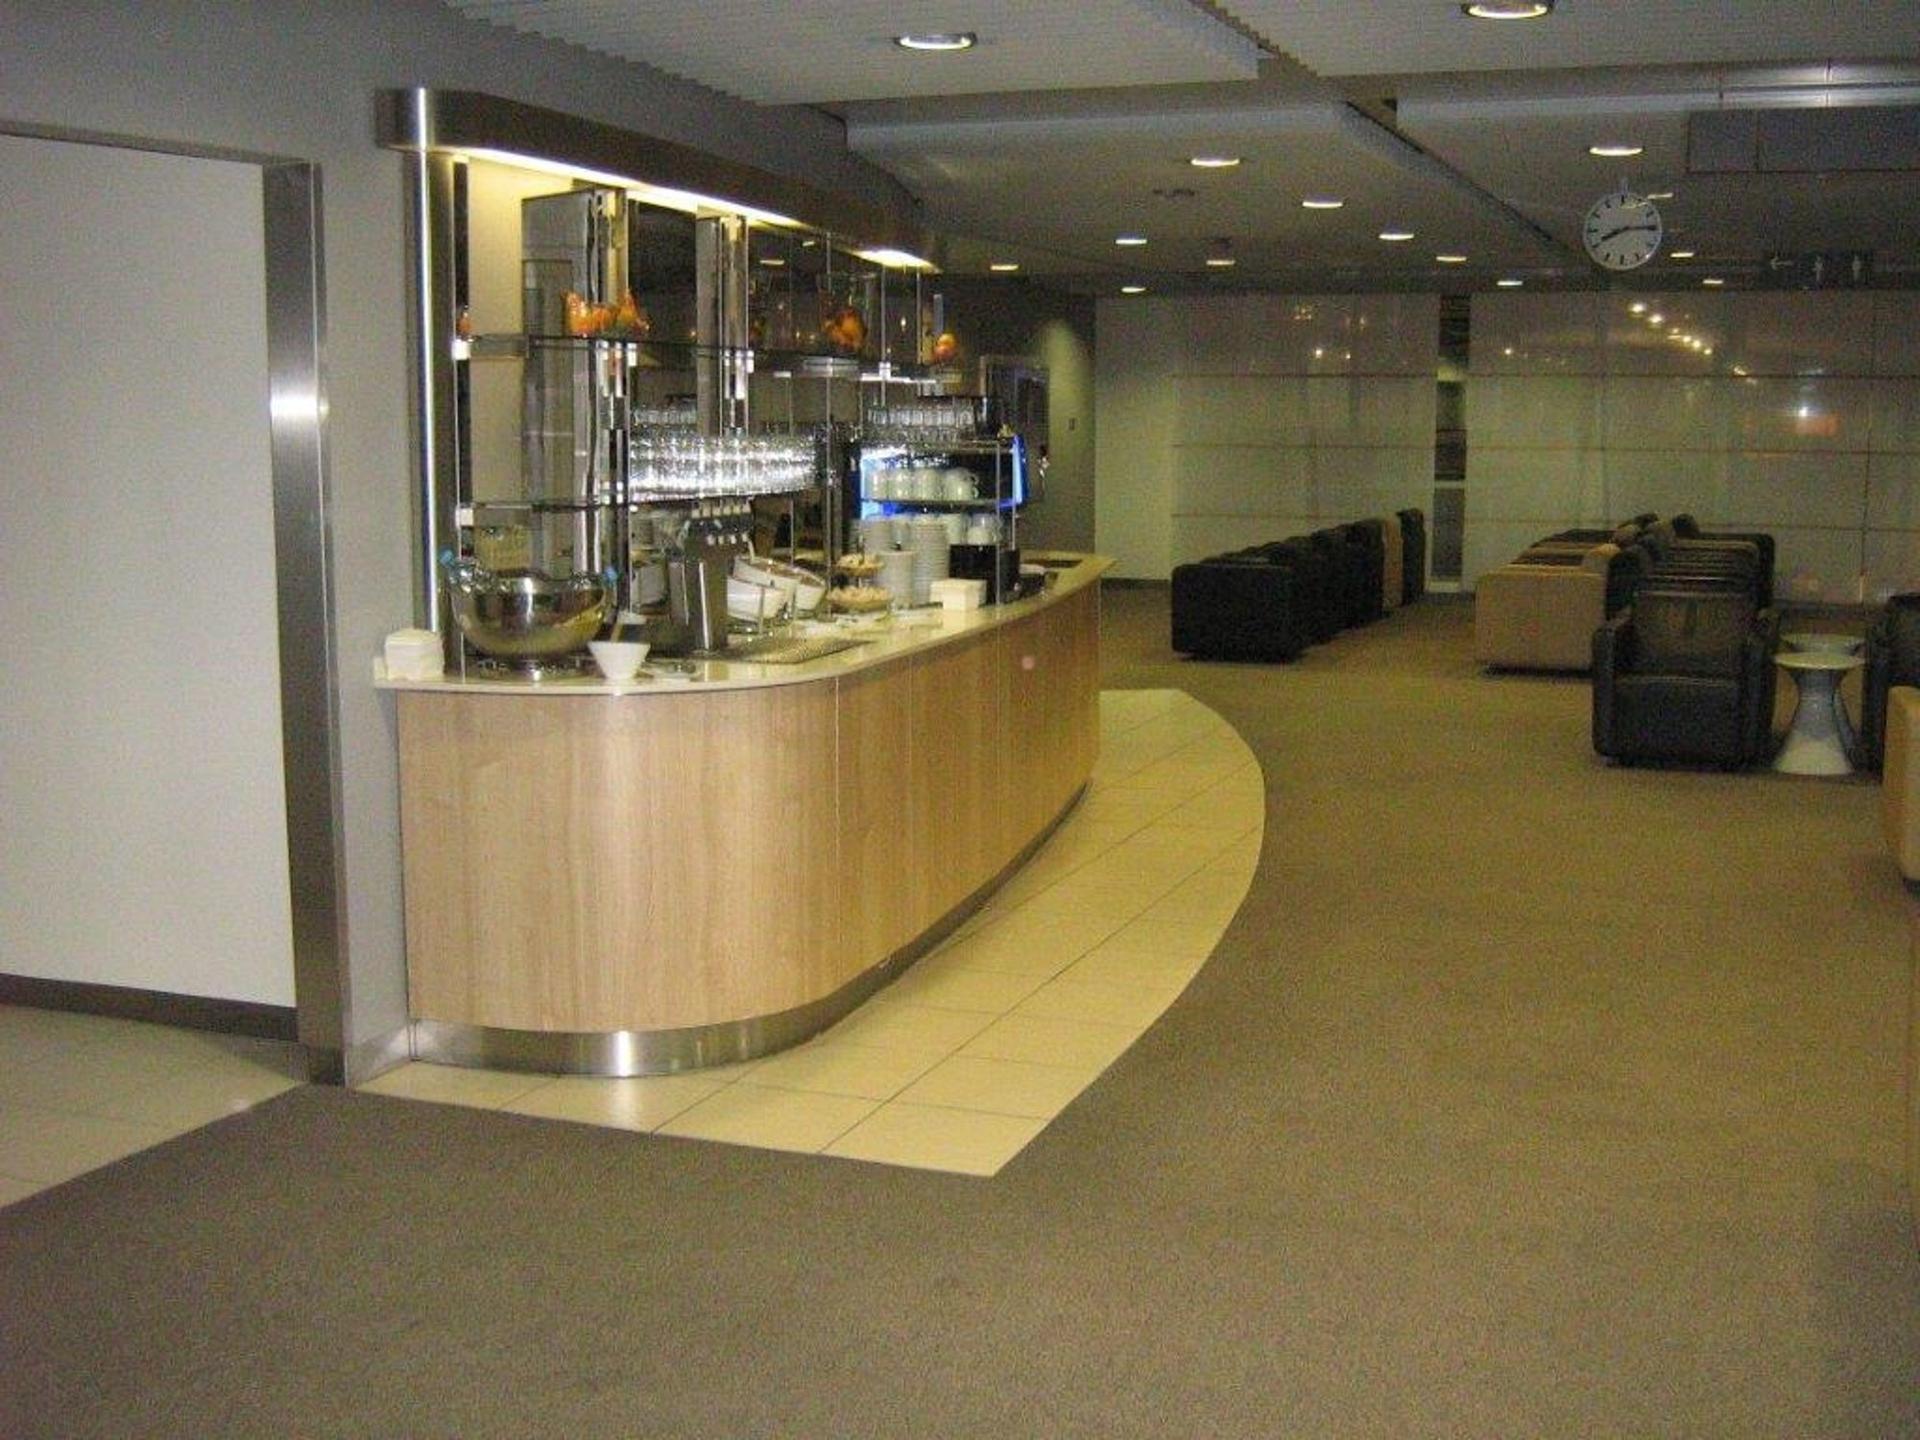 Lufthansa Business Lounge image 10 of 22